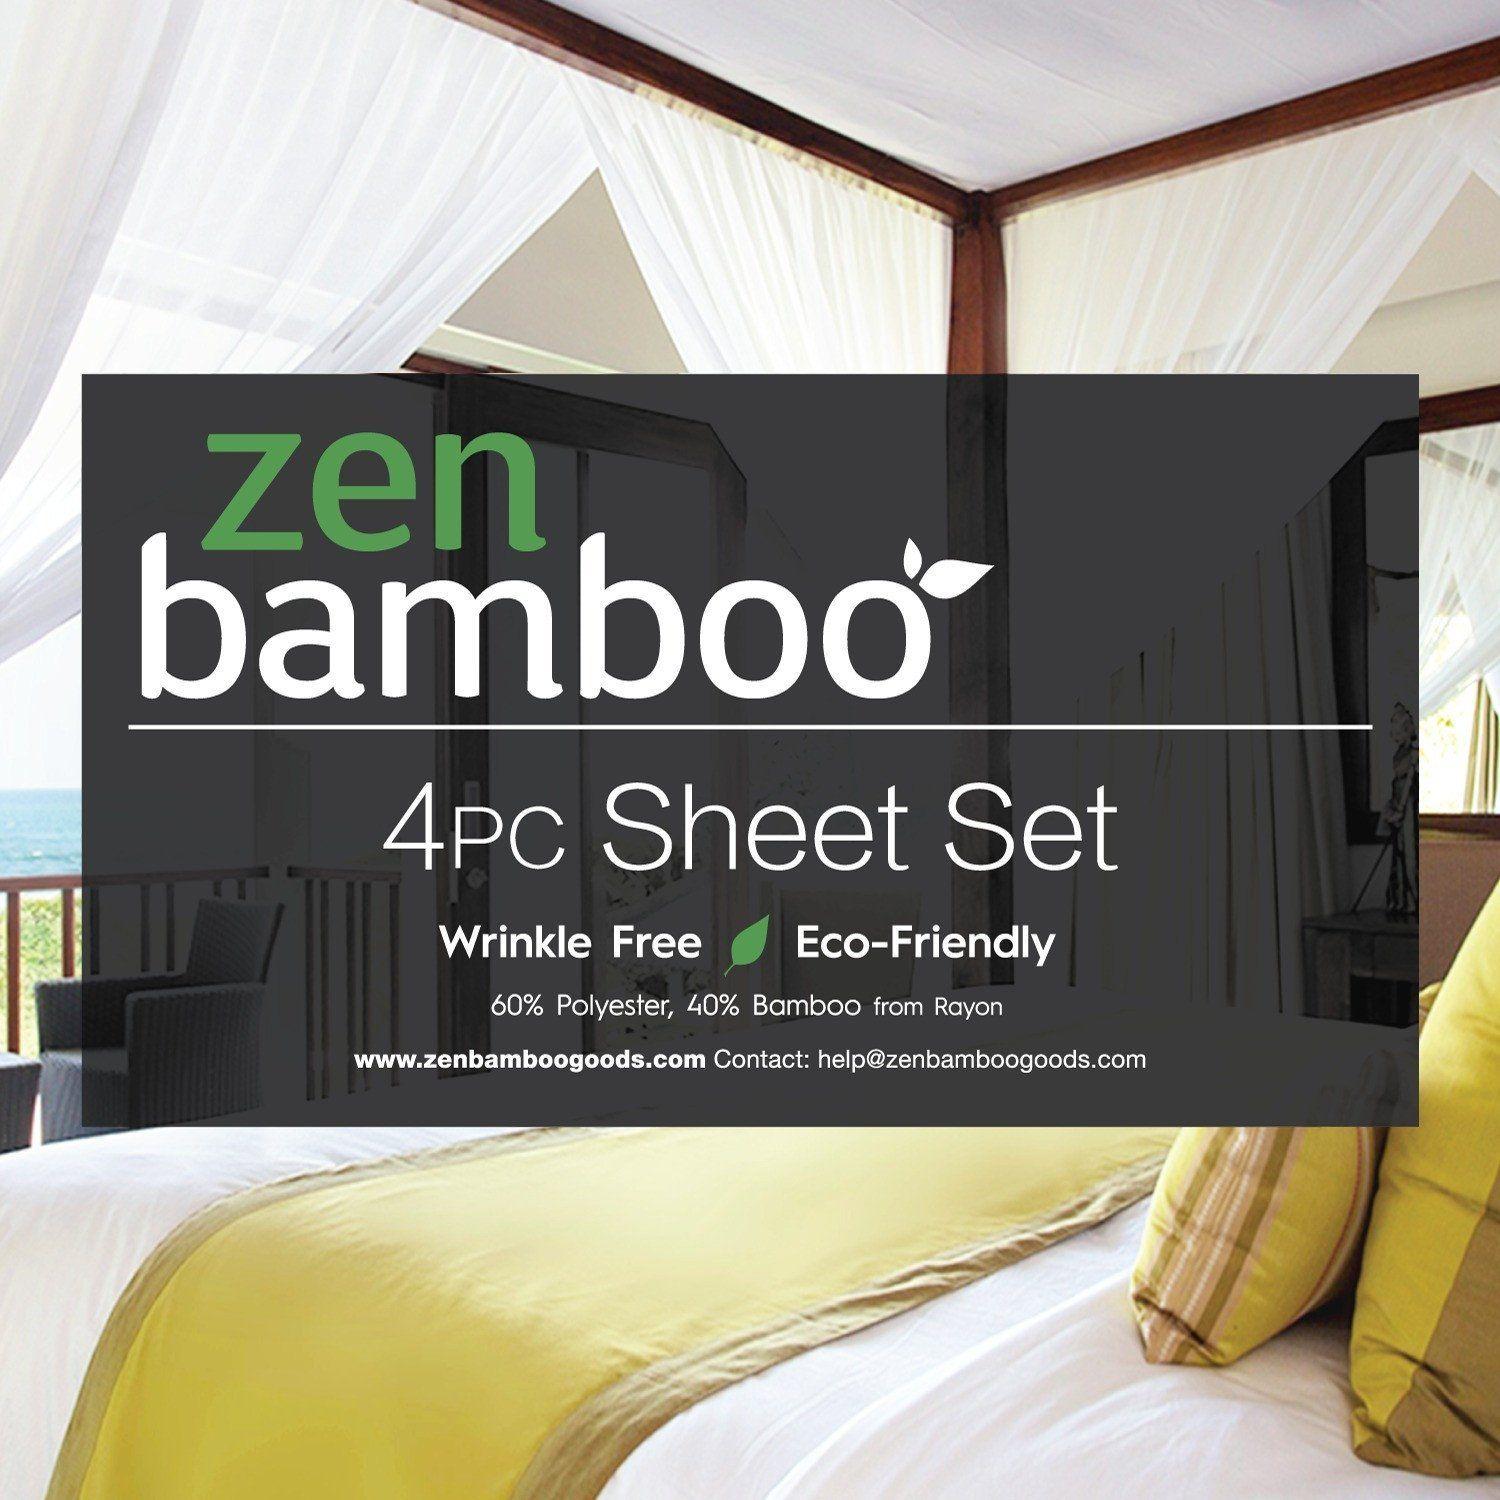 Zen Bamboo Logo - Zen Bamboo Luxury 1500 Series Bed Sheets Friendly